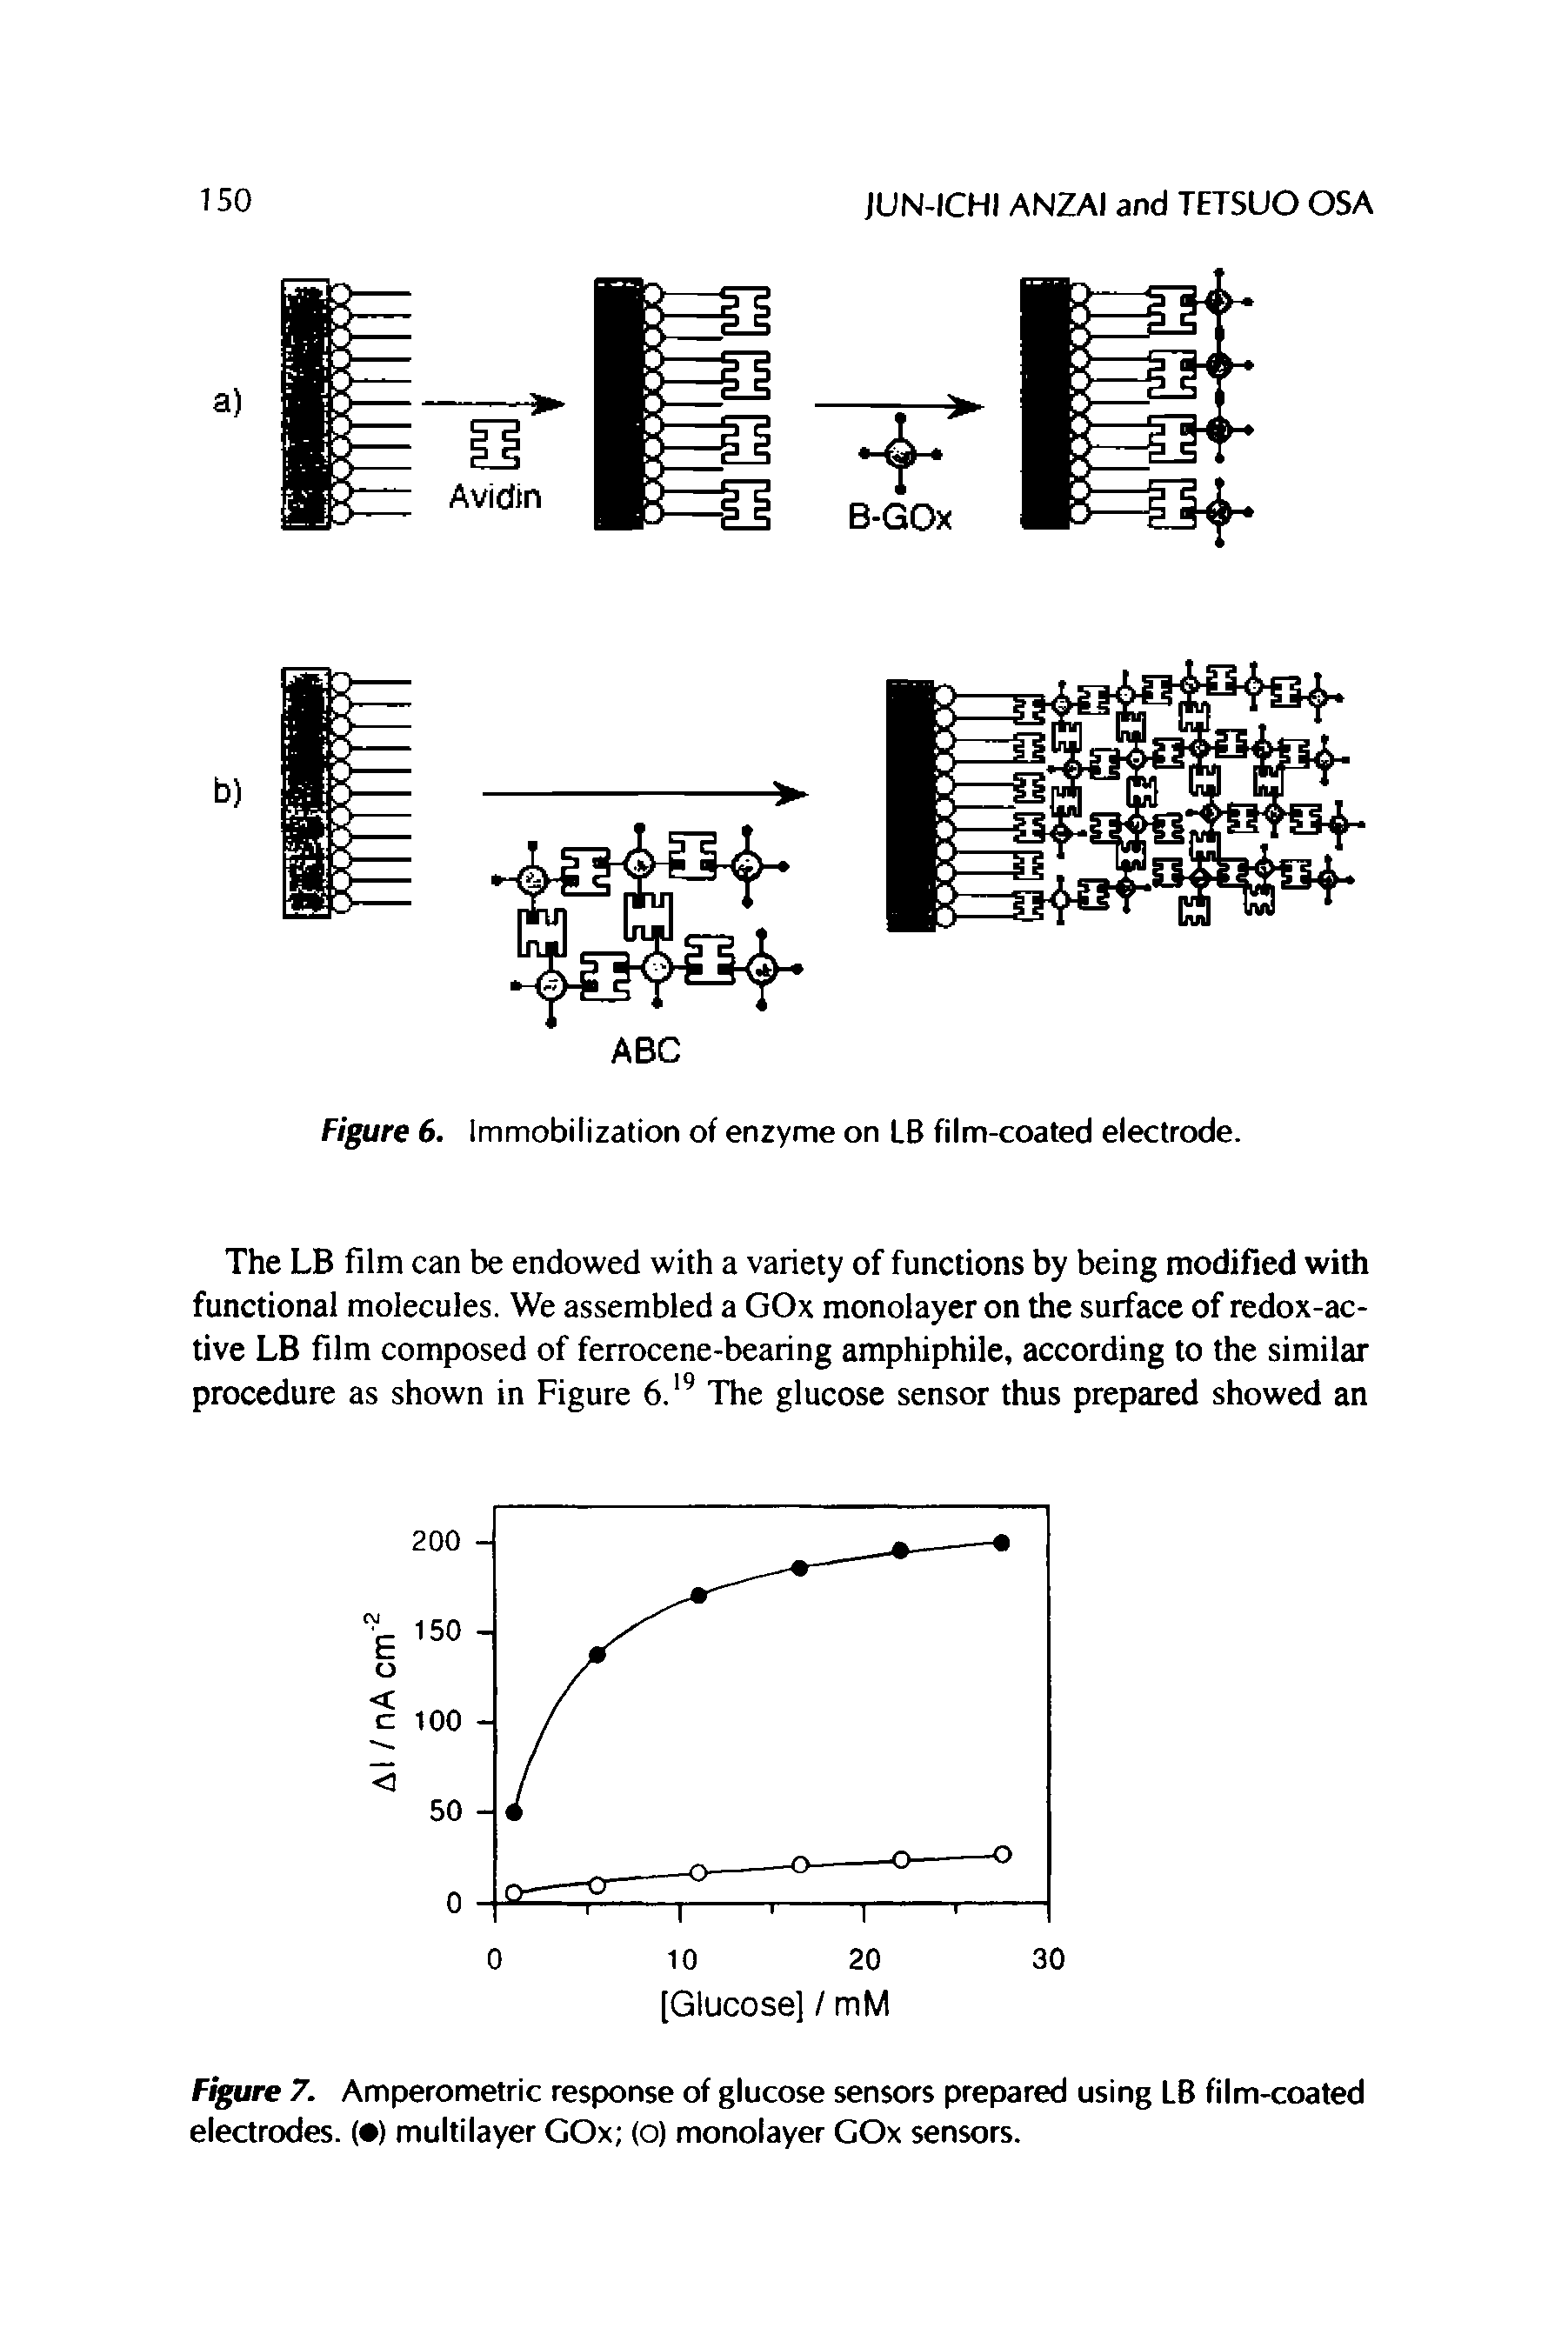 Figure 7. Amperometric response of glucose sensors prepared using LB film-coated electrodes. ( ) multilayer GOx (o) monolayer GOx sensors.